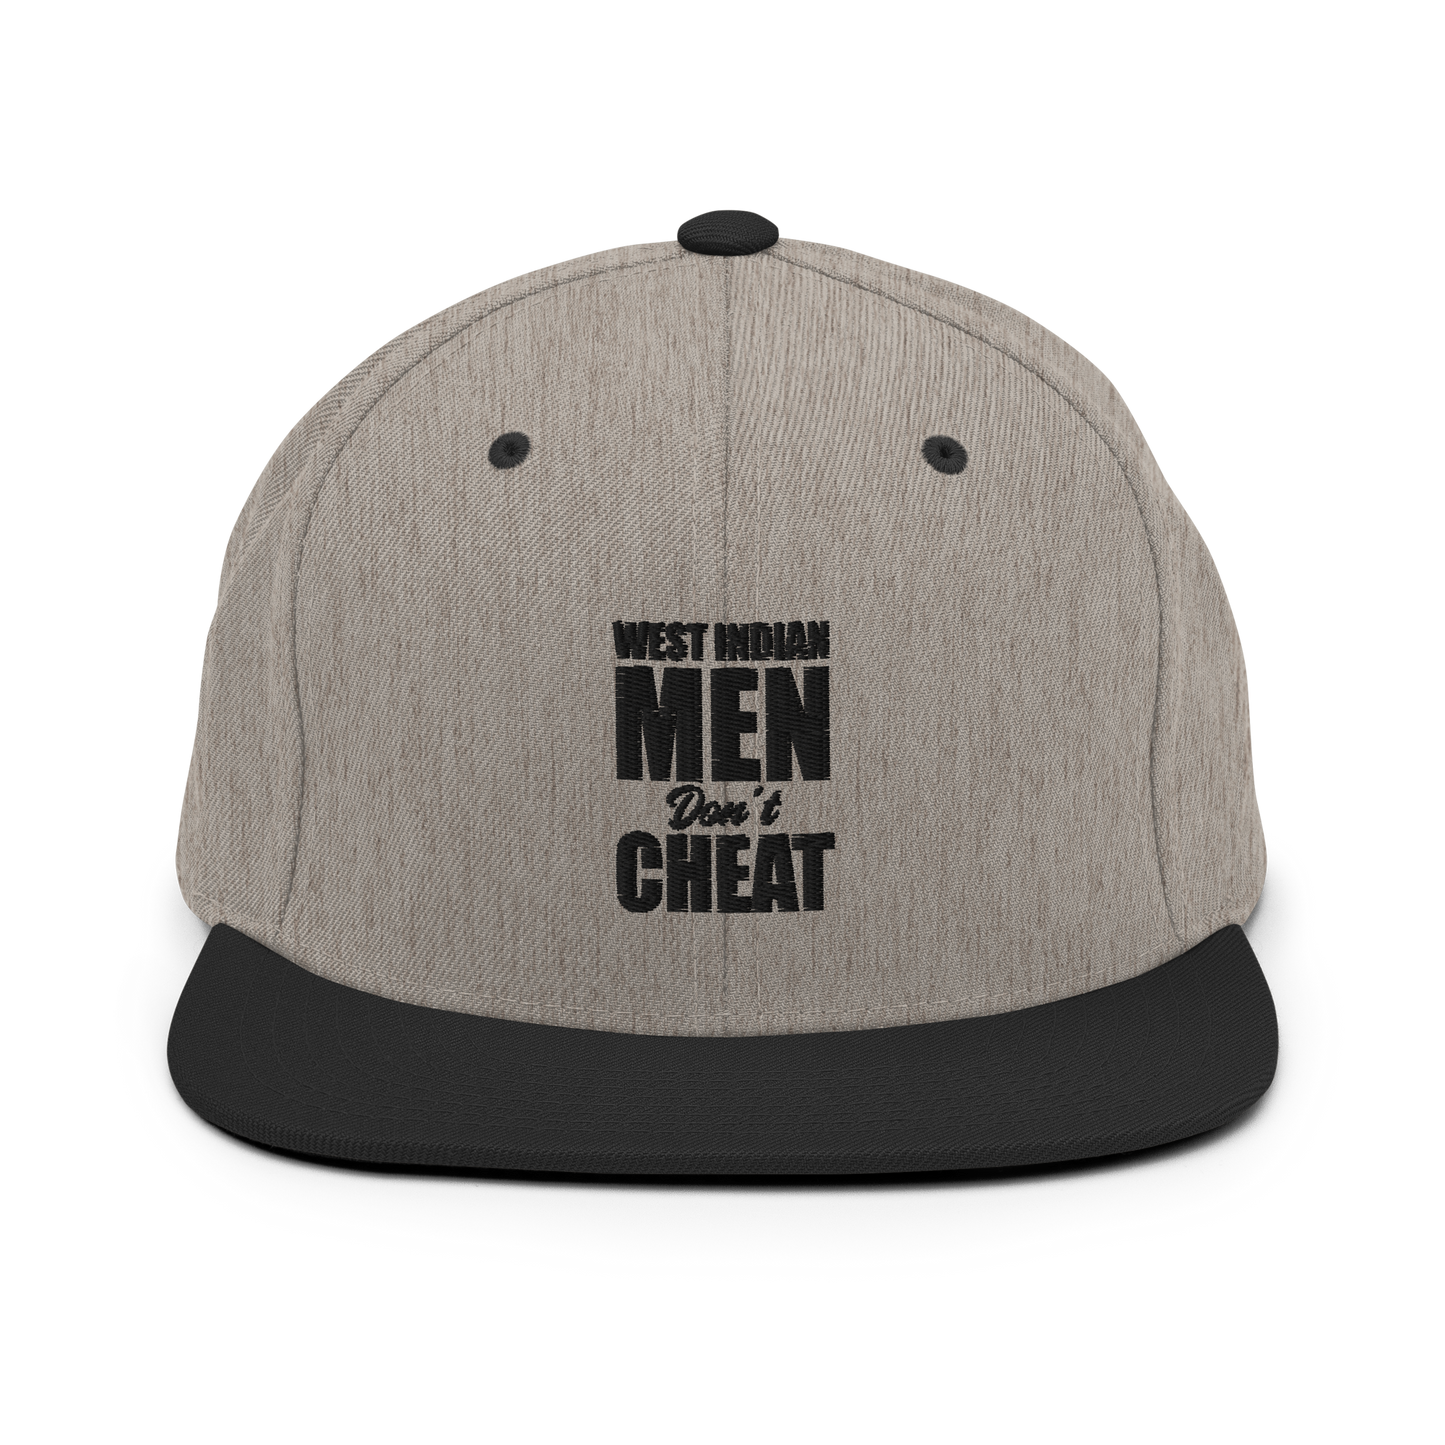 West Indian Men Don't Cheat Snapback Hat